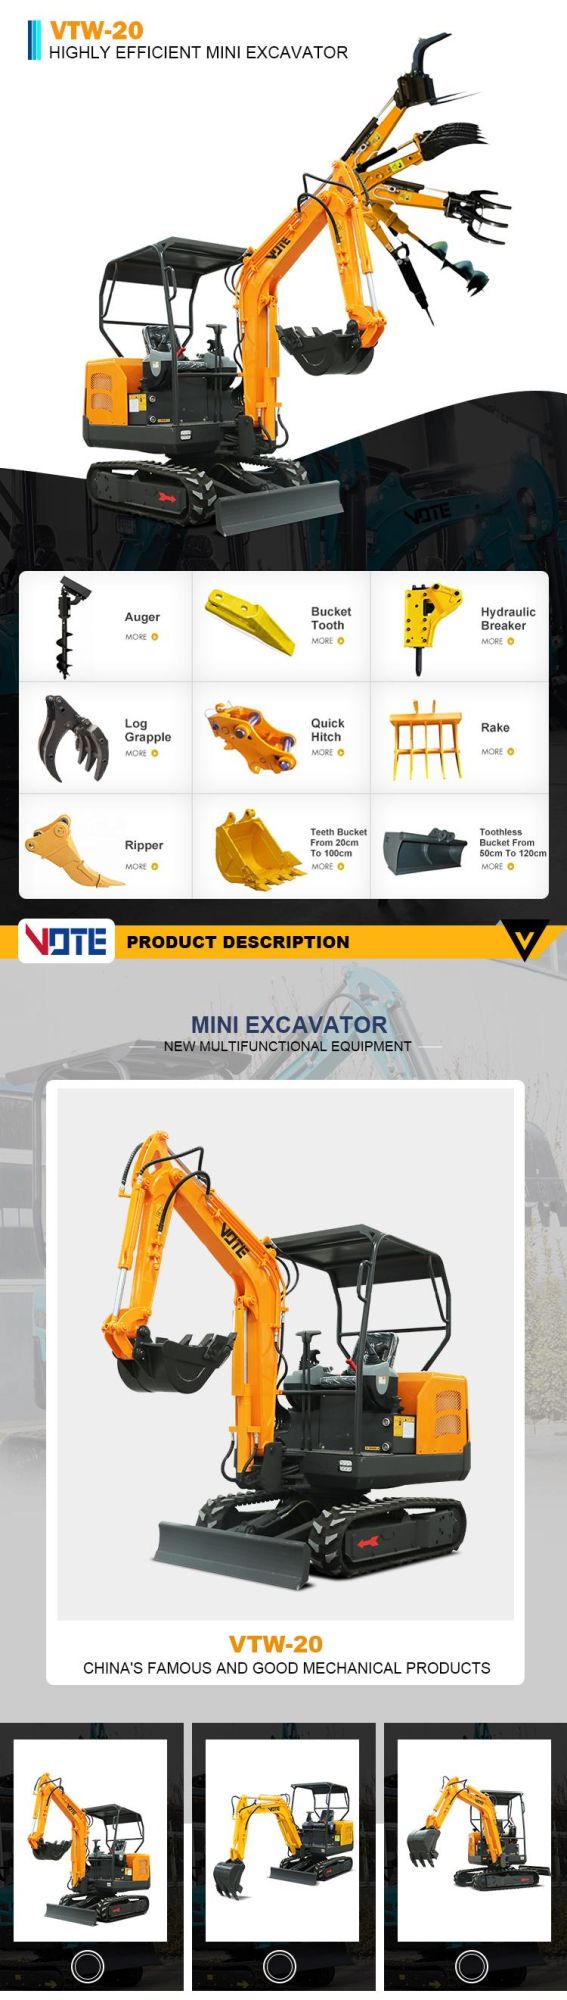 Cheap Price Chinese Mini Excavator Small Digger Crawler Excavator 2 Ton for Sale CE Certificate Yanmar Engine Euaro 5 Mini Digger